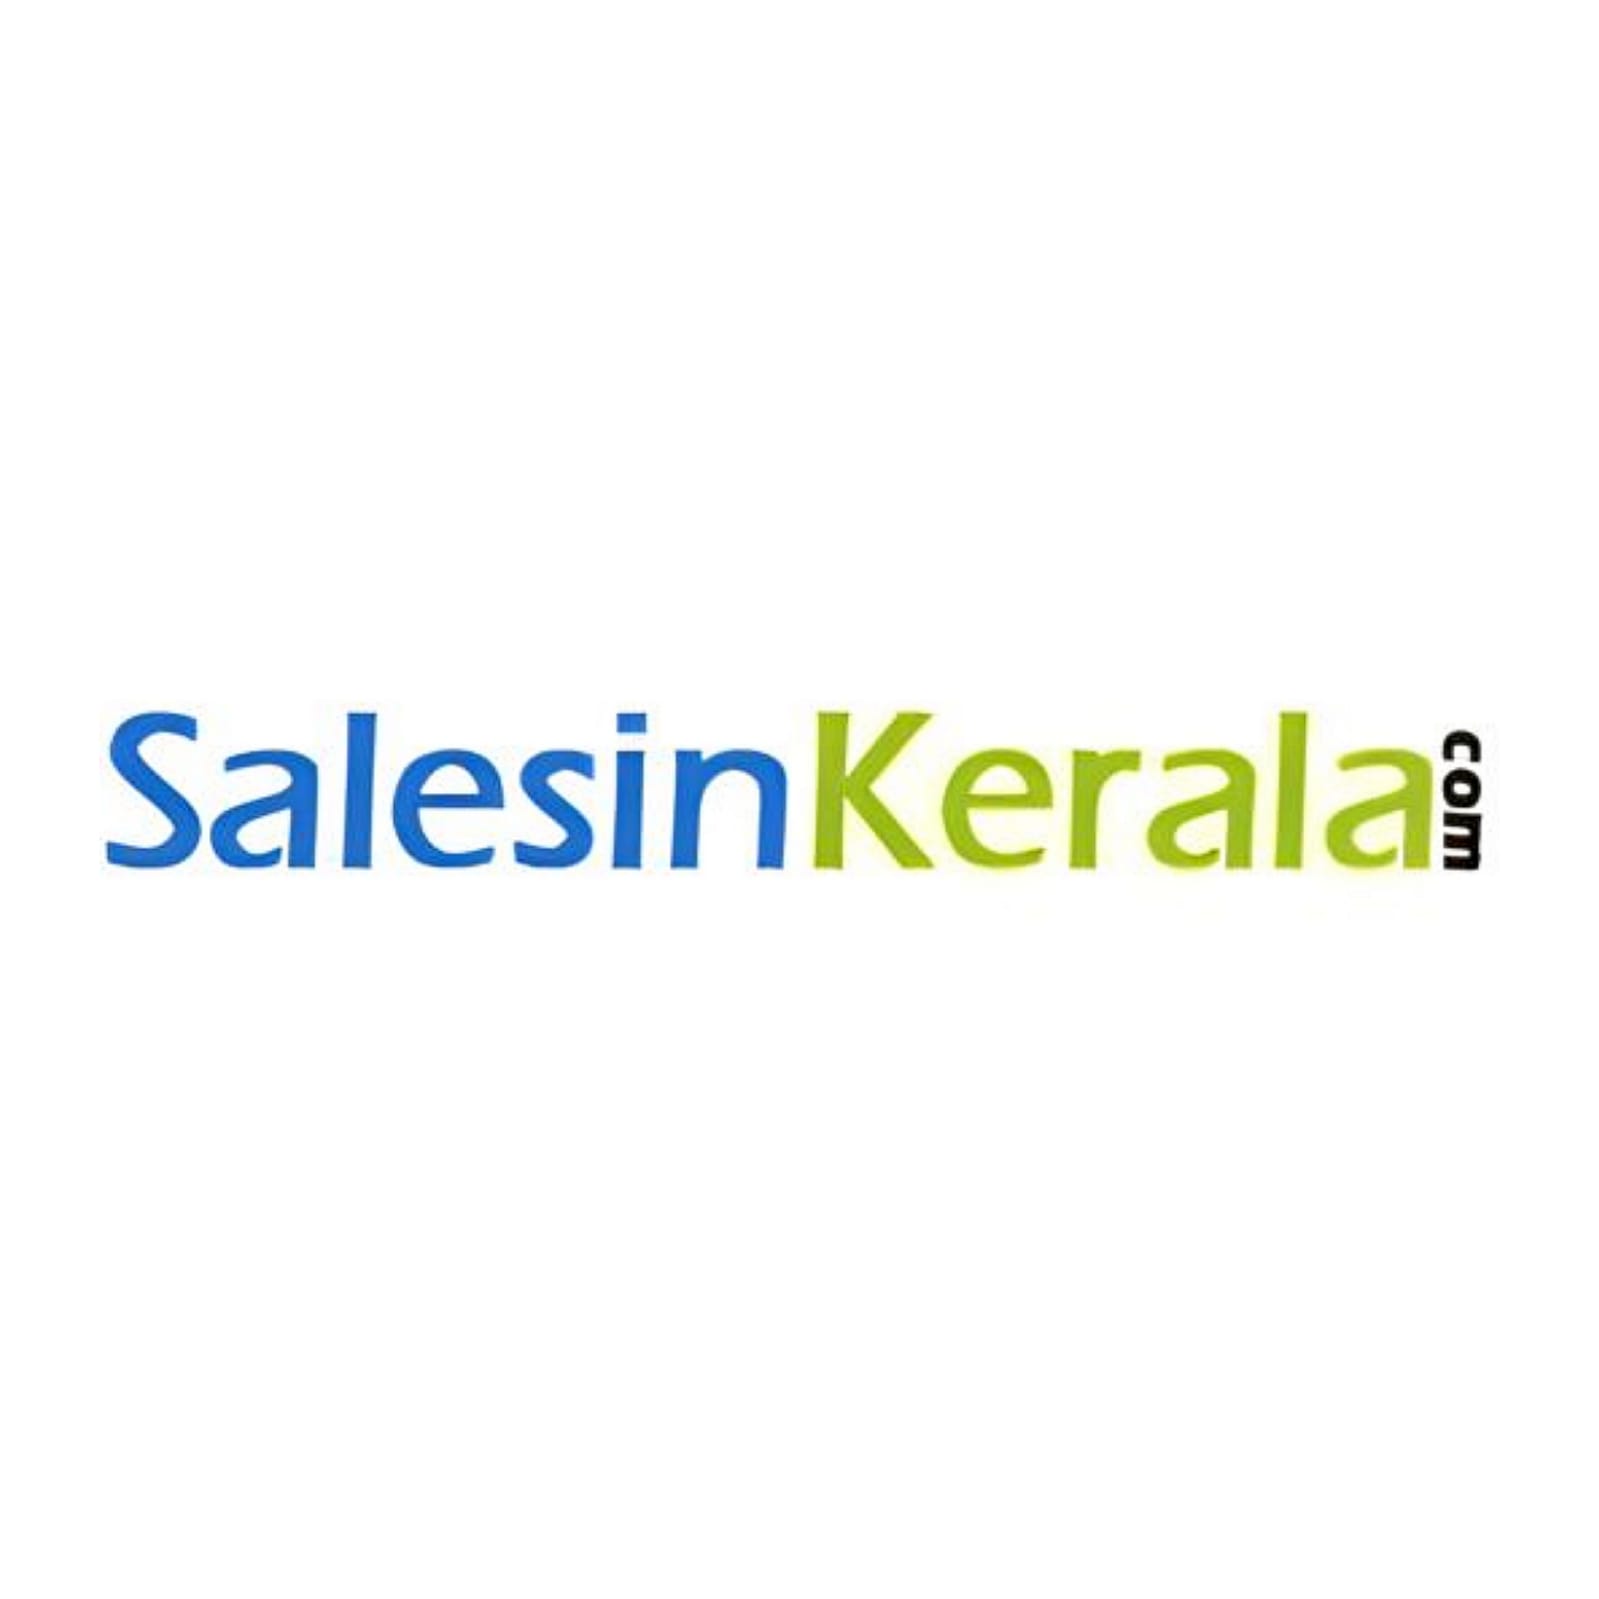 salesinkerala-logo